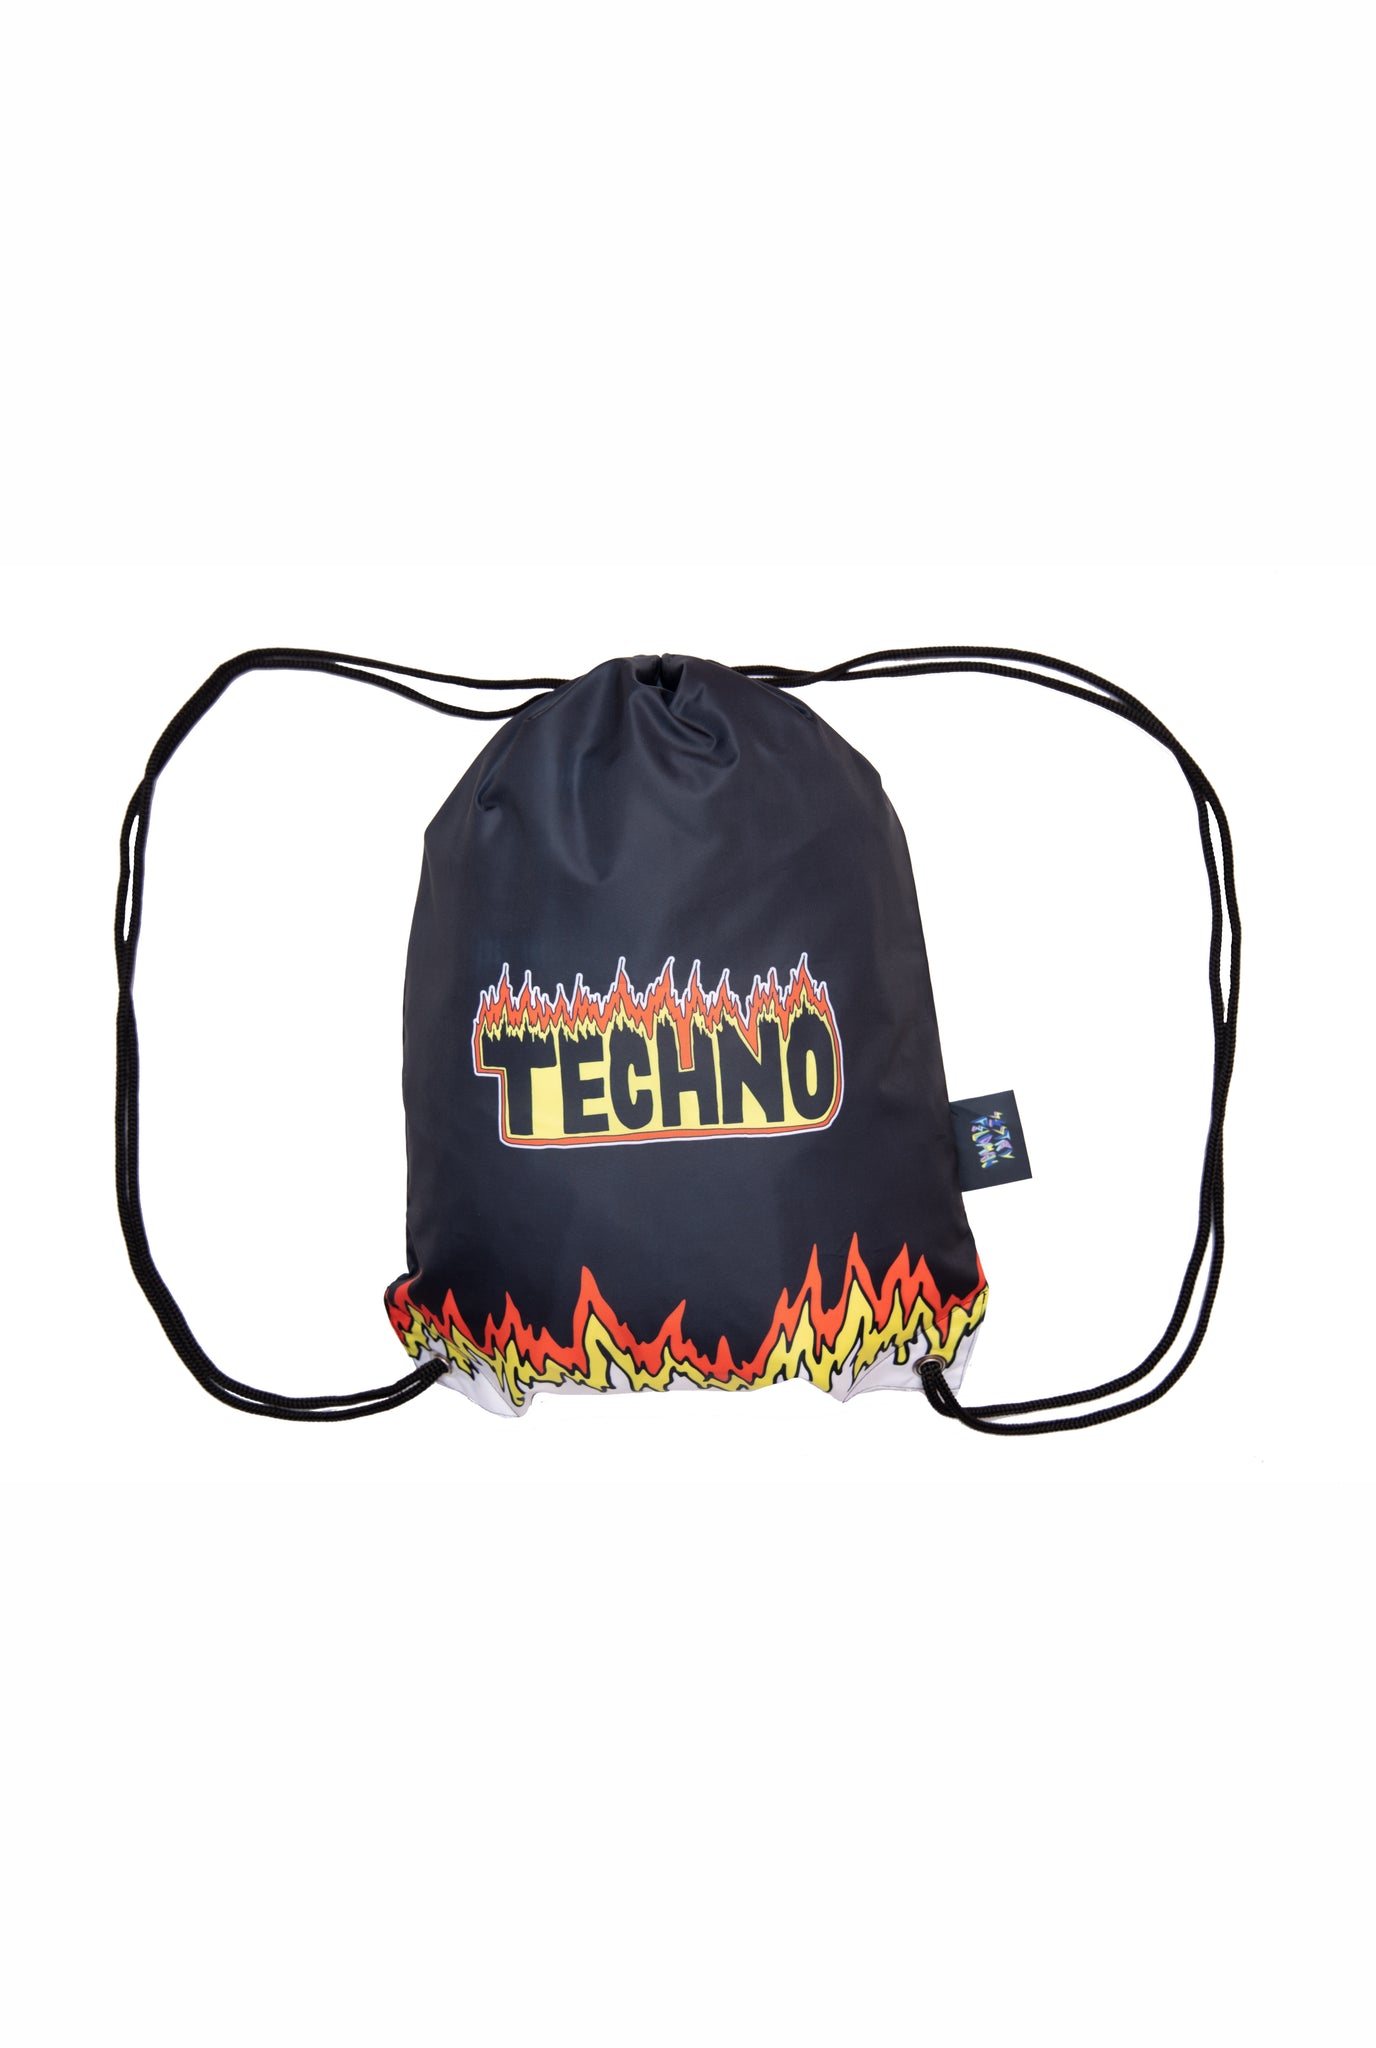 Techno Fuel Backpacks